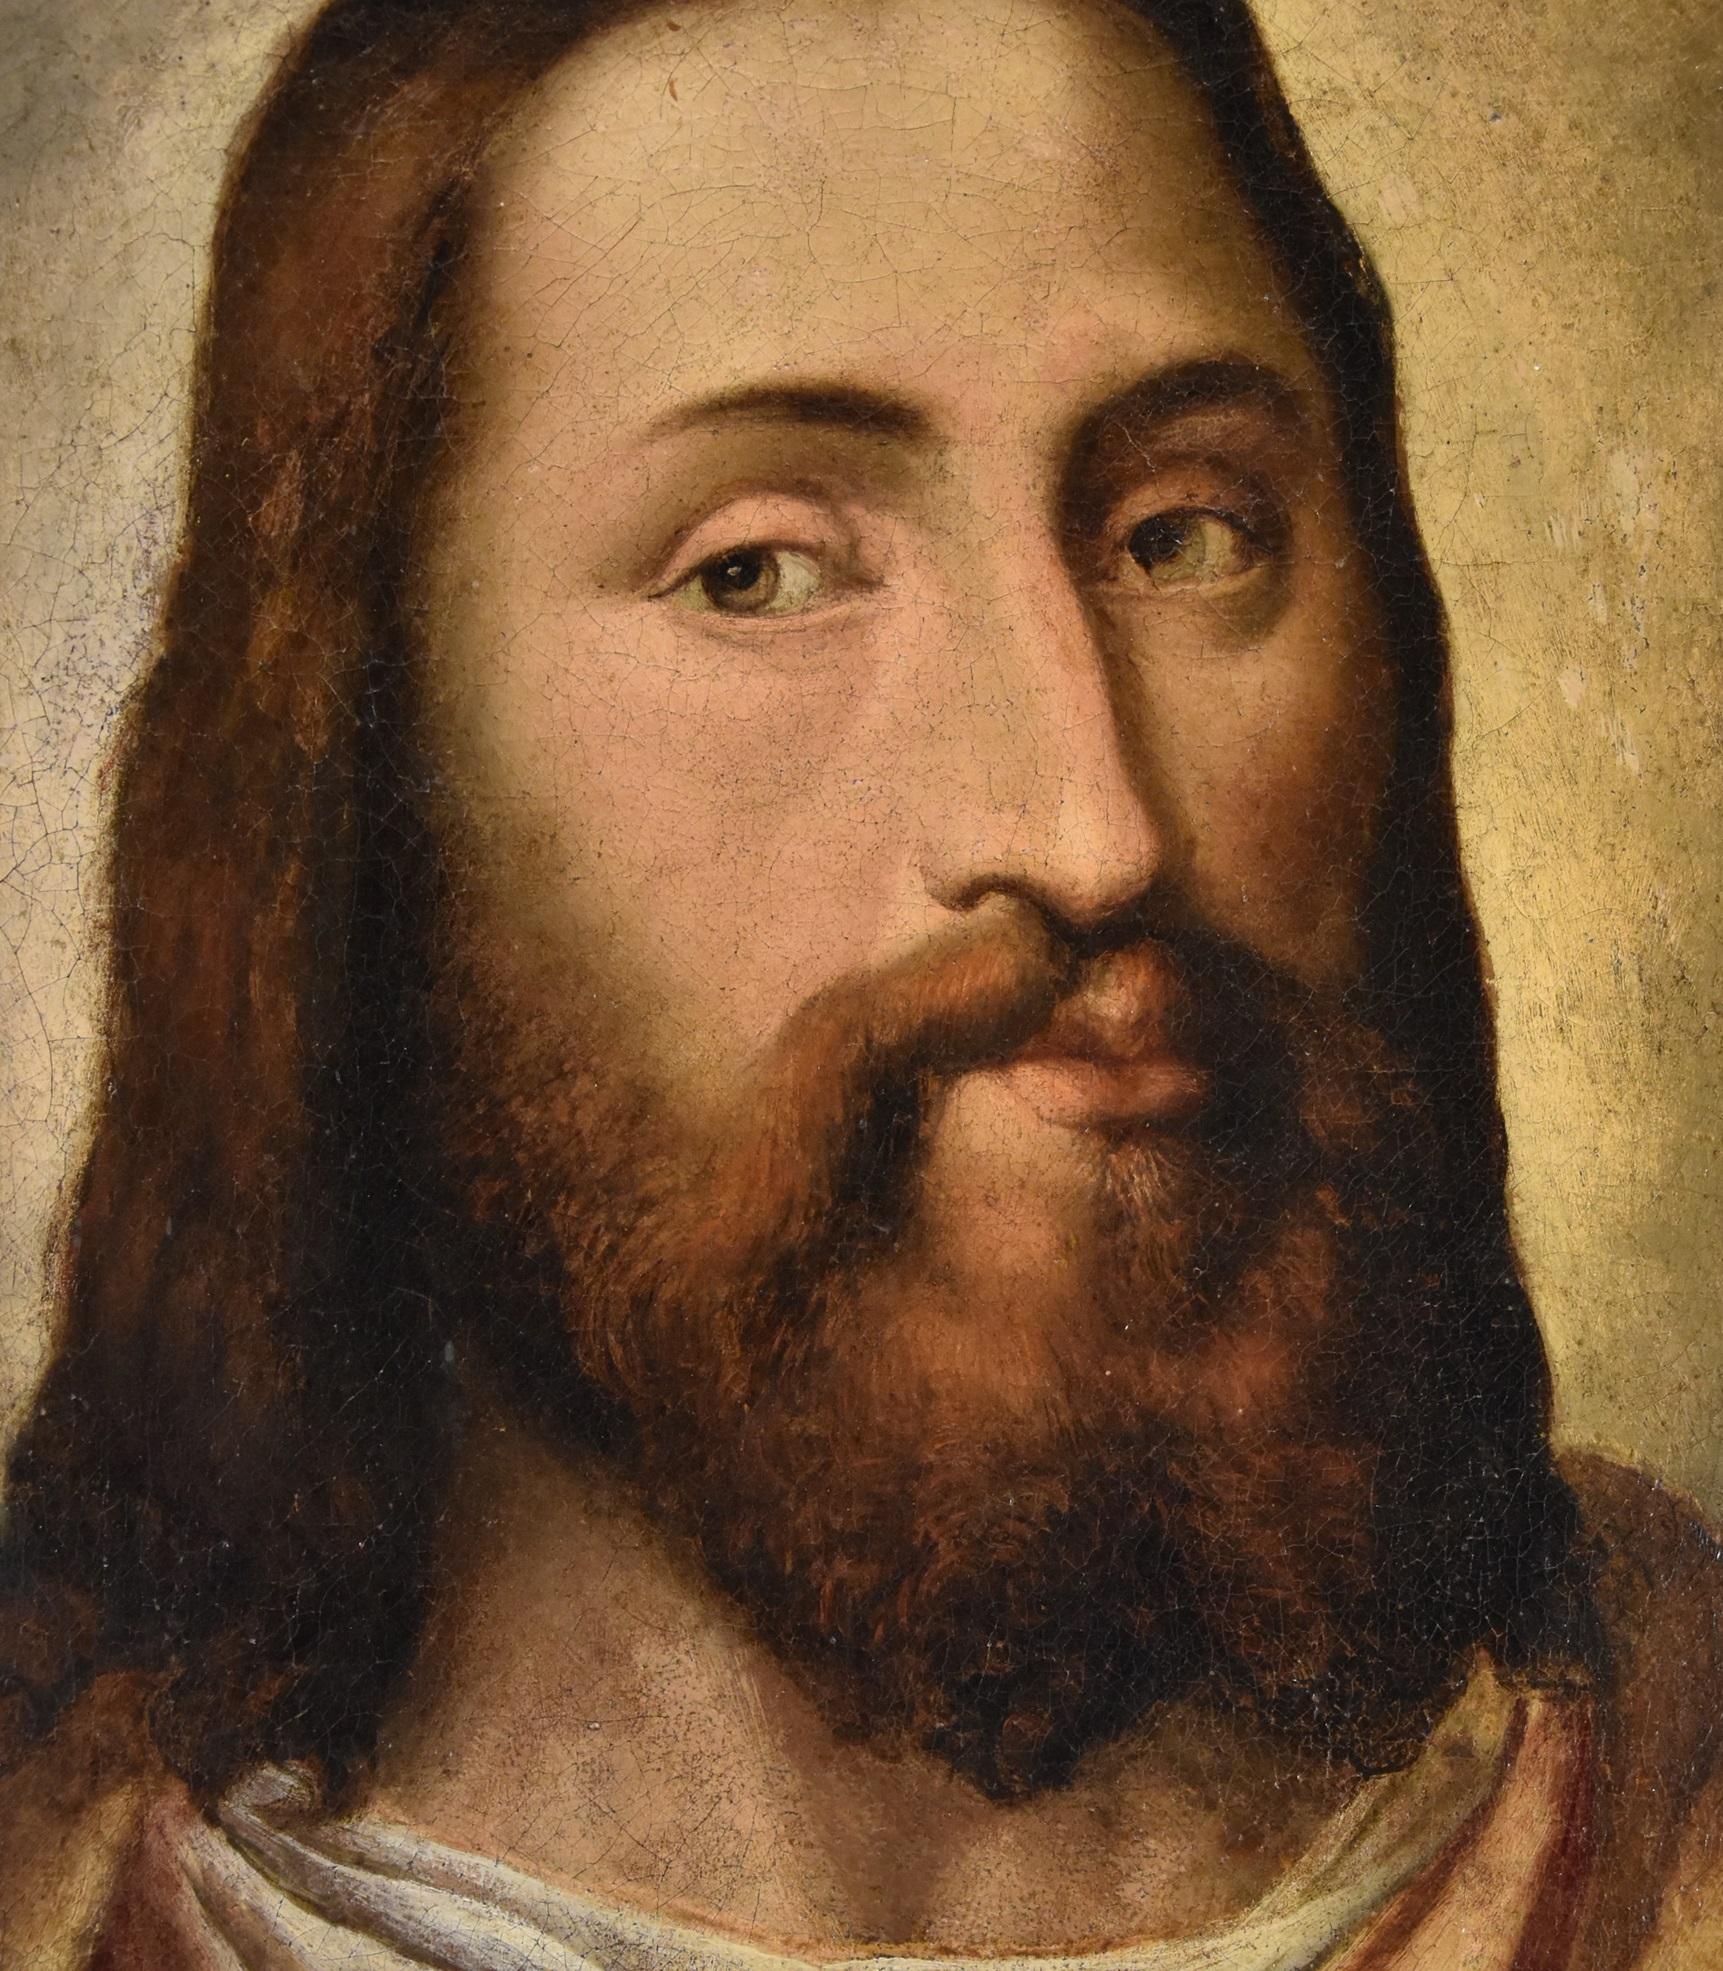 Portrait Christ Titian 16th Century Paint Oil on canvas Old master Venezia Italy 2